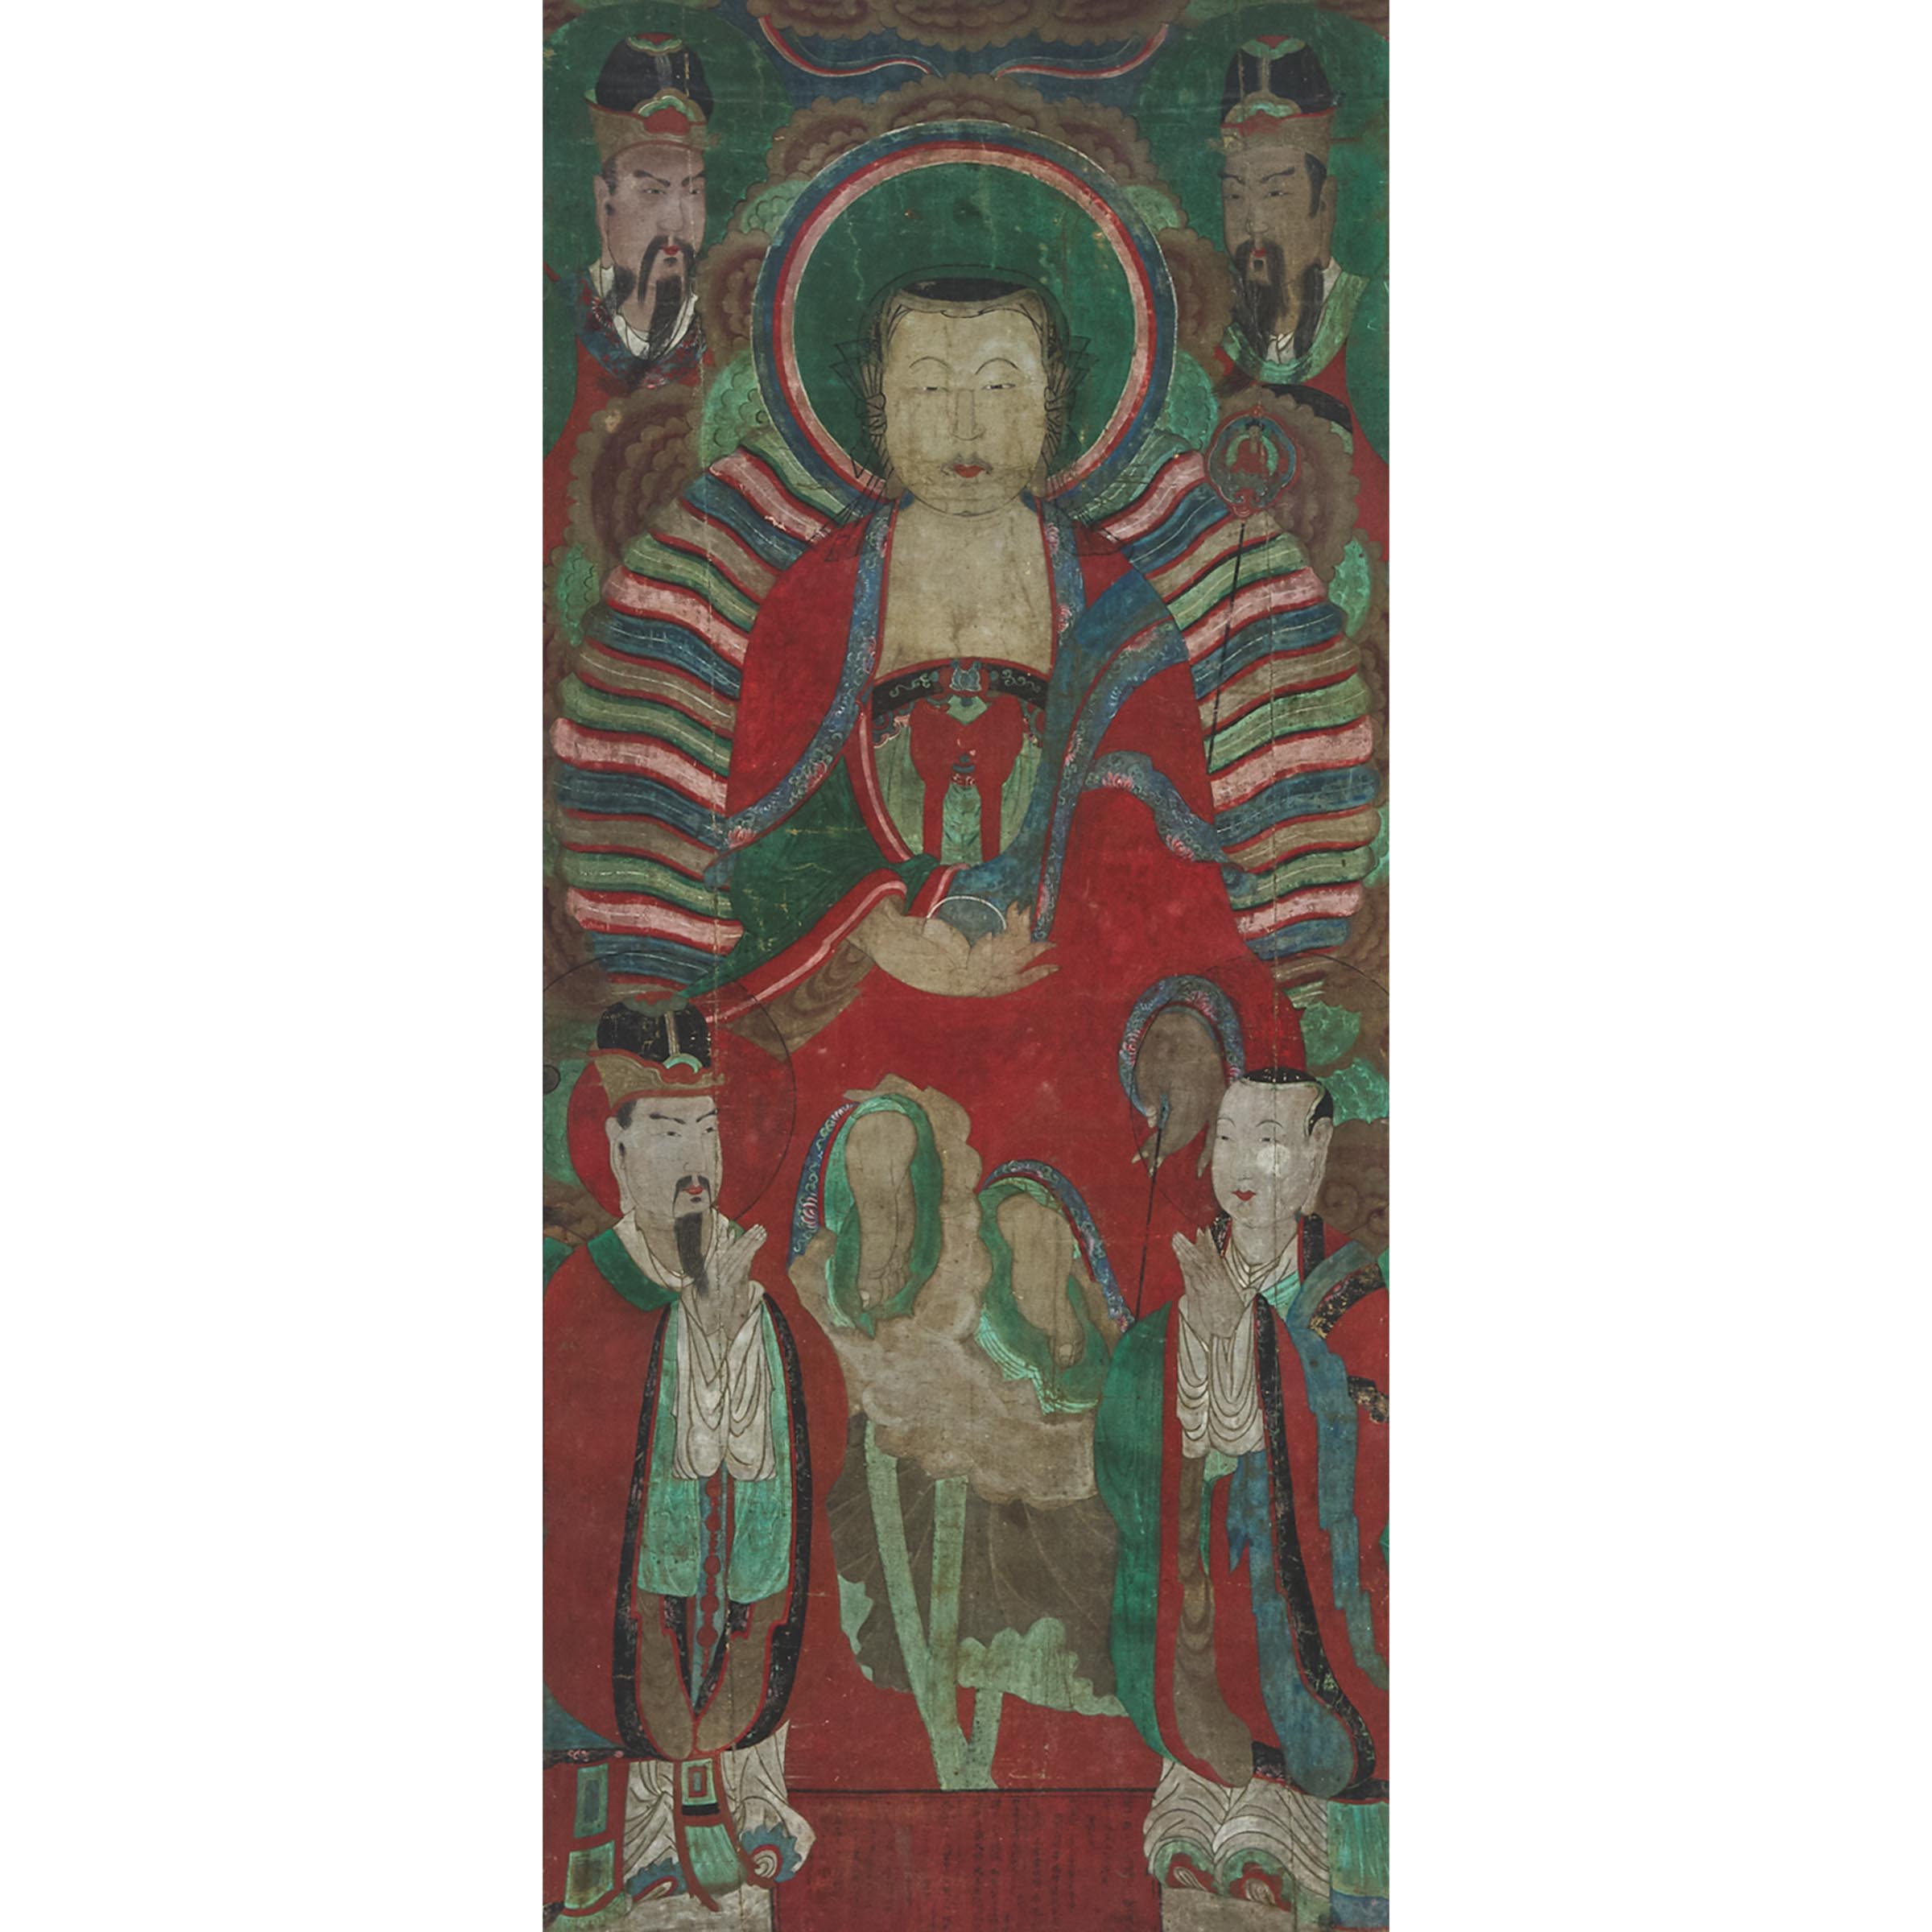 A Painting of Bodhisattva Ksitigarbha